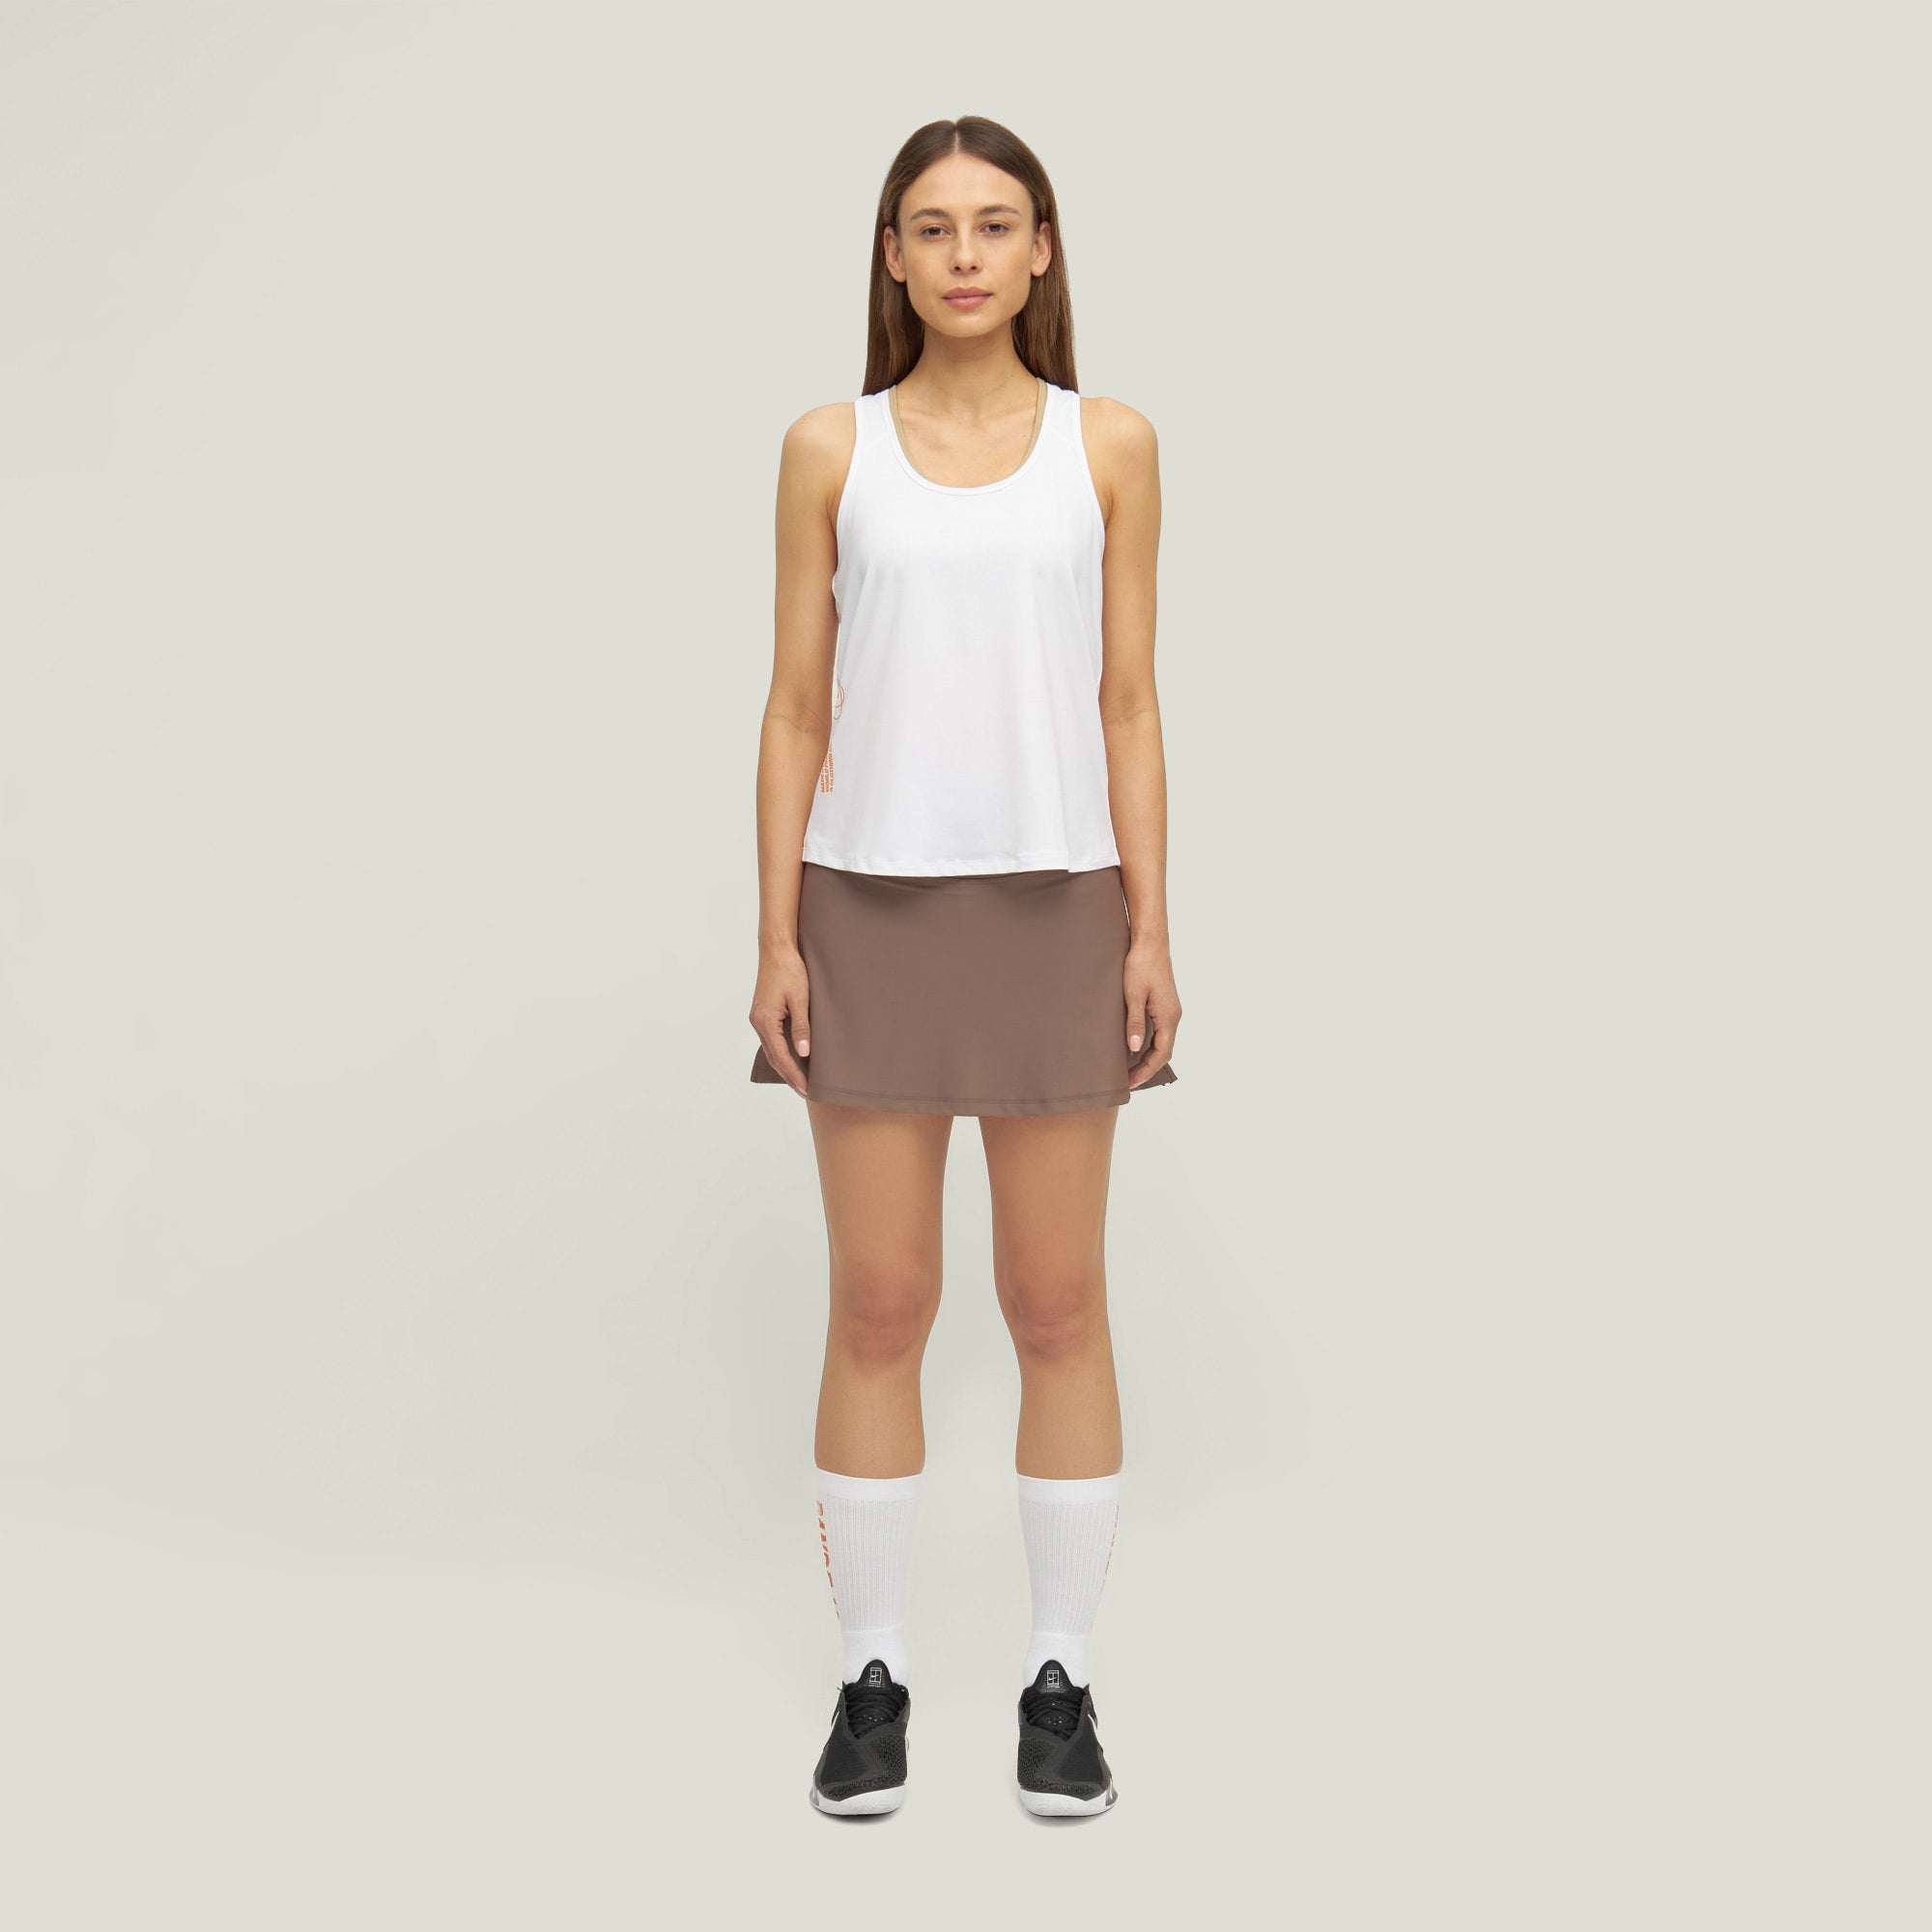 Oncourt Globe Skirt - Brown